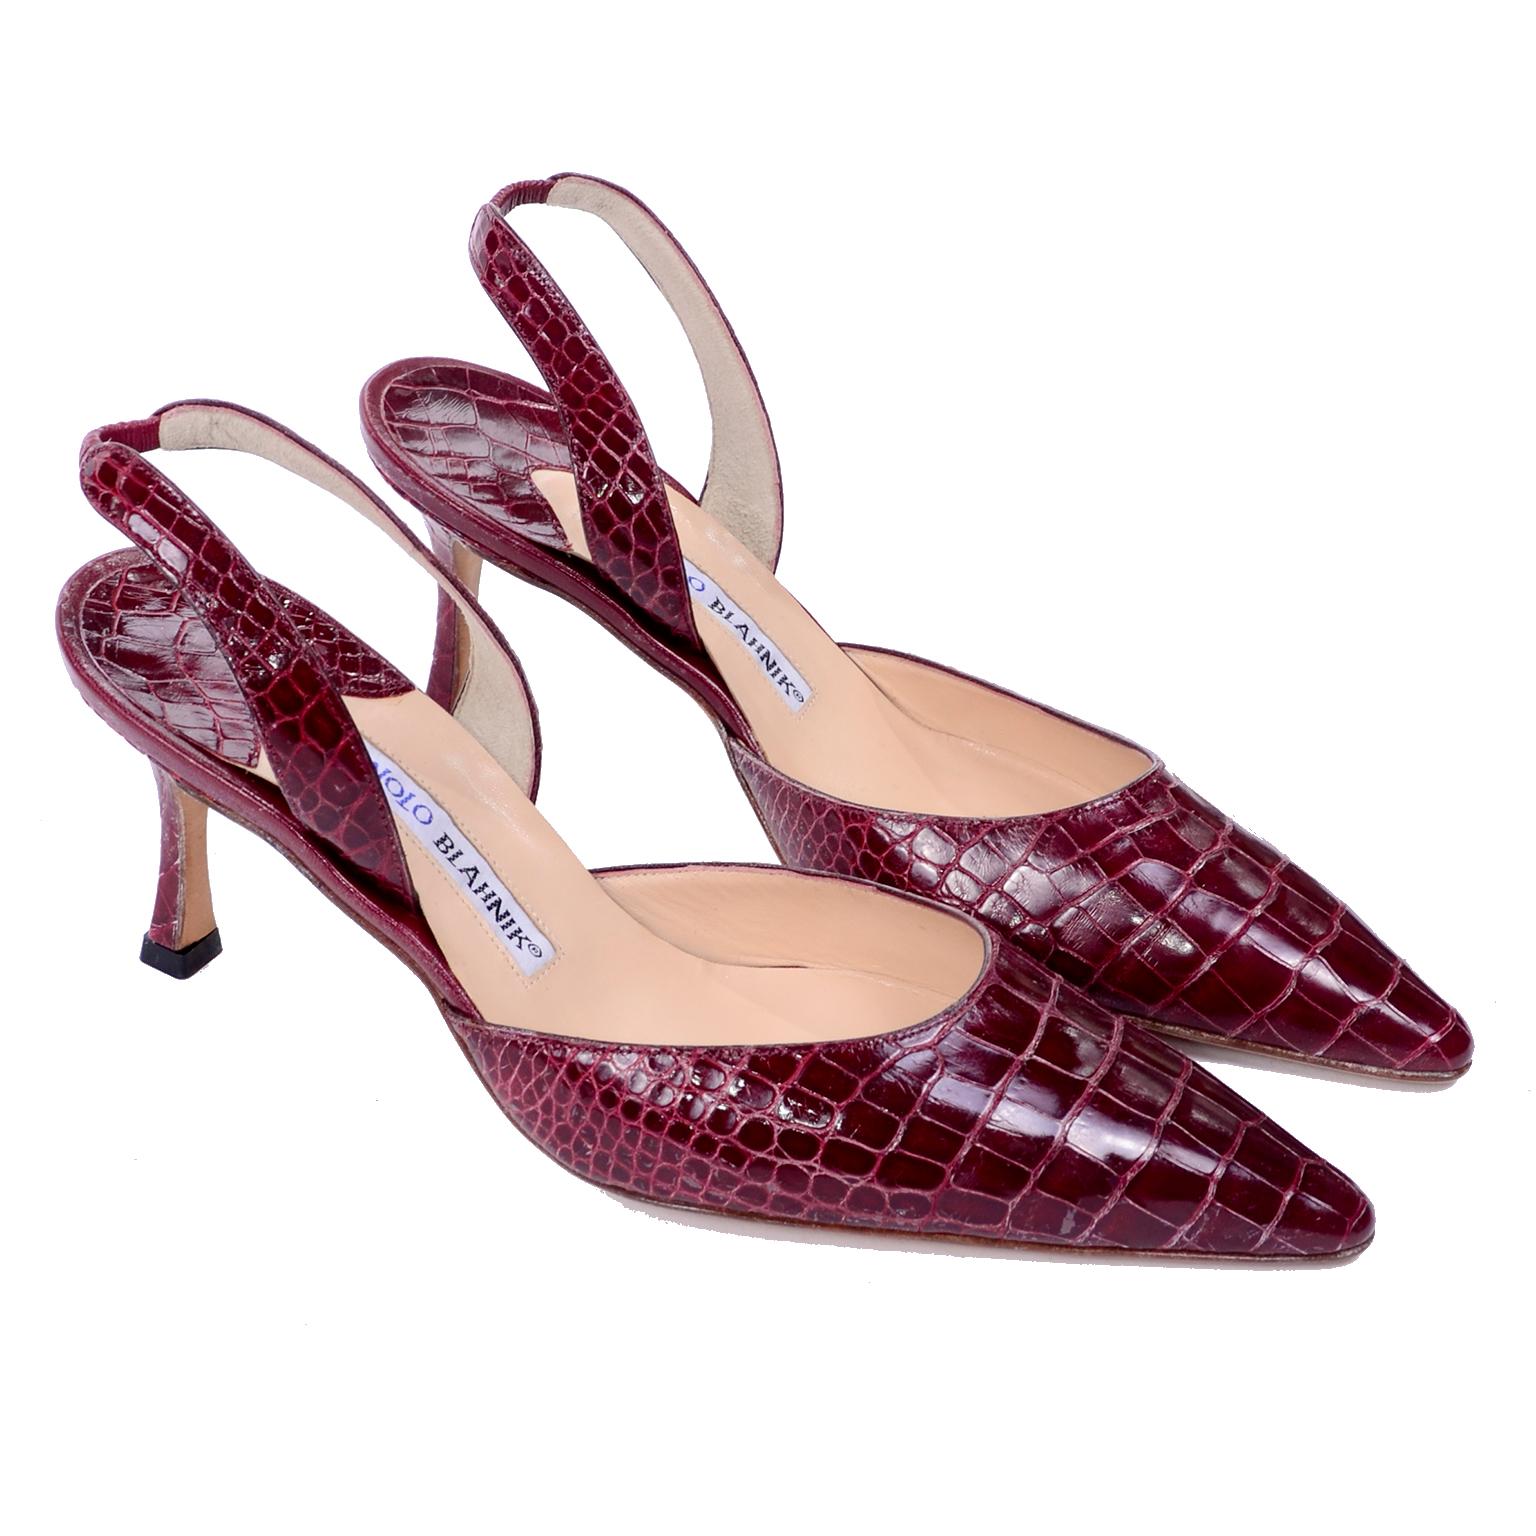 Manolo Blahnik Shoes Burgundy Crocodile Sling Back Heels 38.5 Size 8